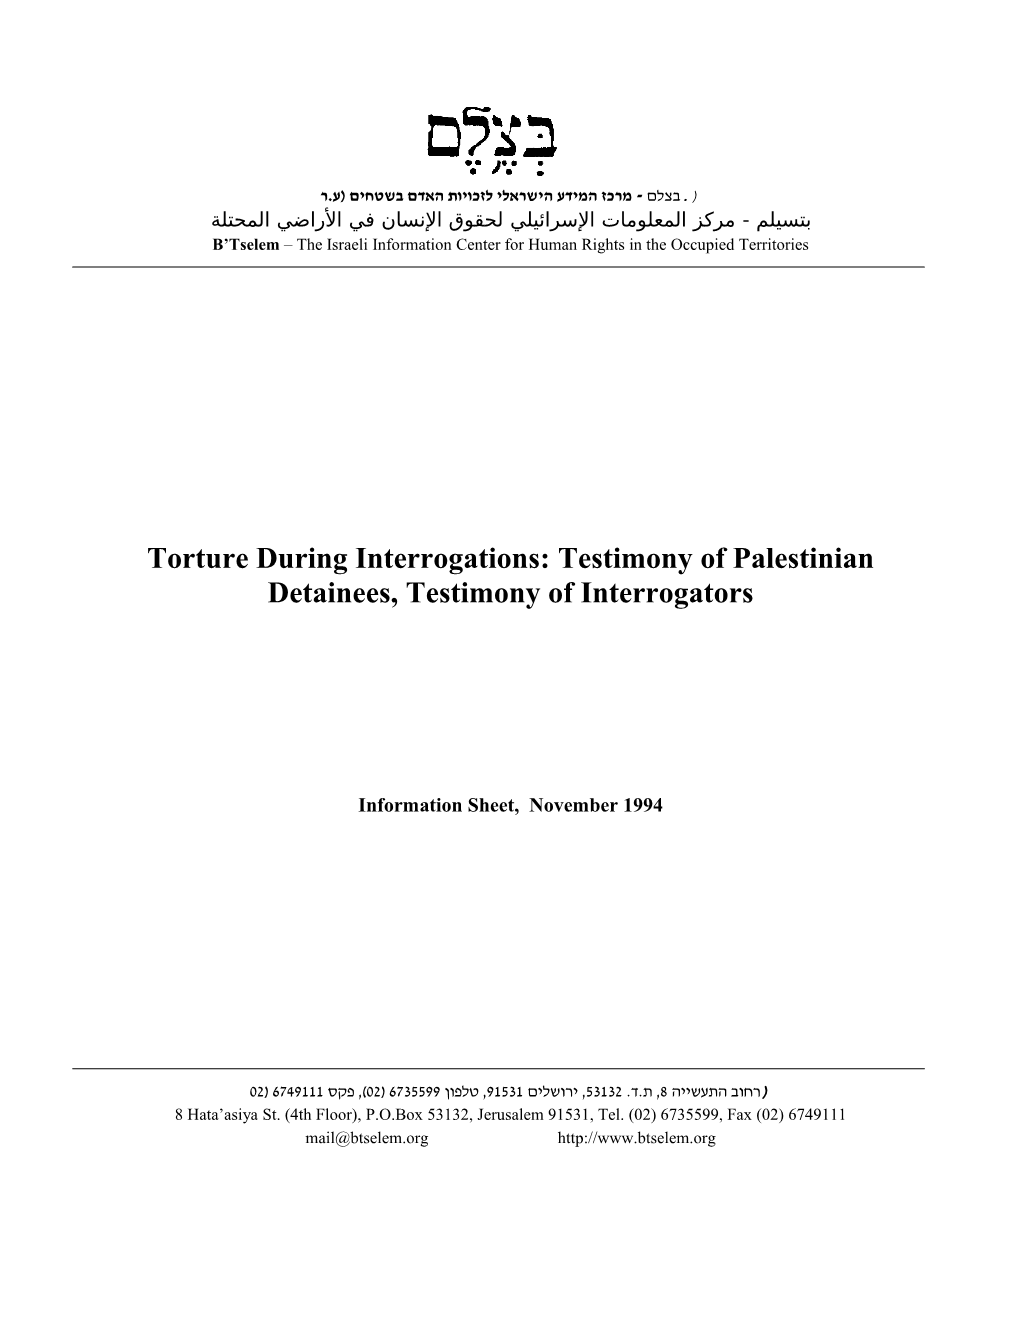 B'tselem Report: Torture During Interrogations: Testimony of Palestinian Detainees, Testimony